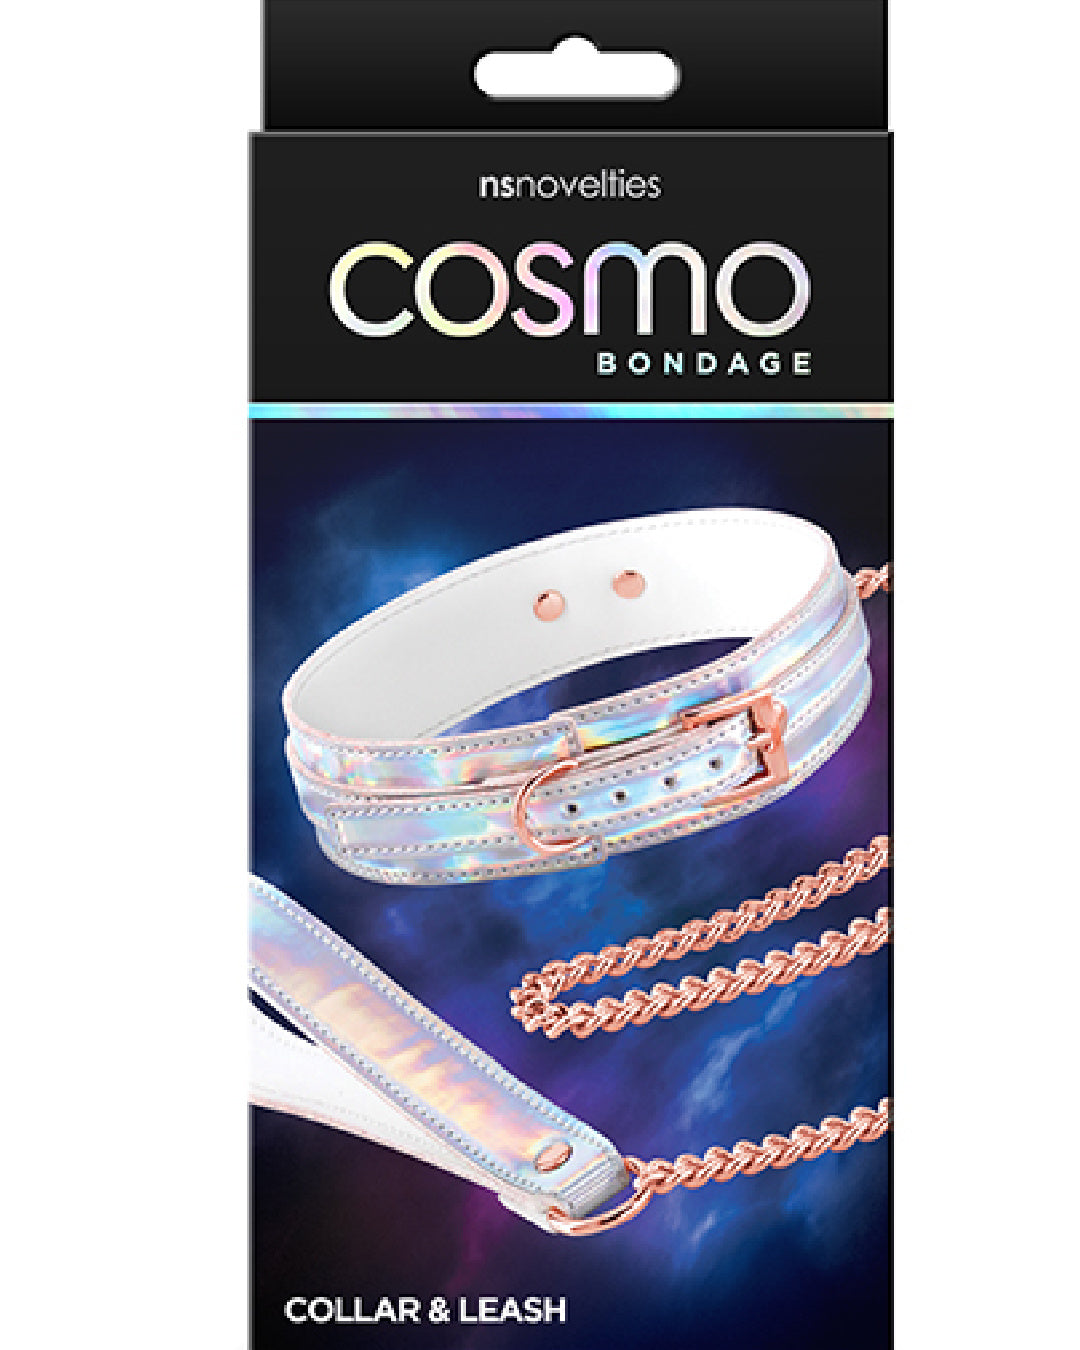 Cosmo Bondage Holographic Collar and Leash product box 